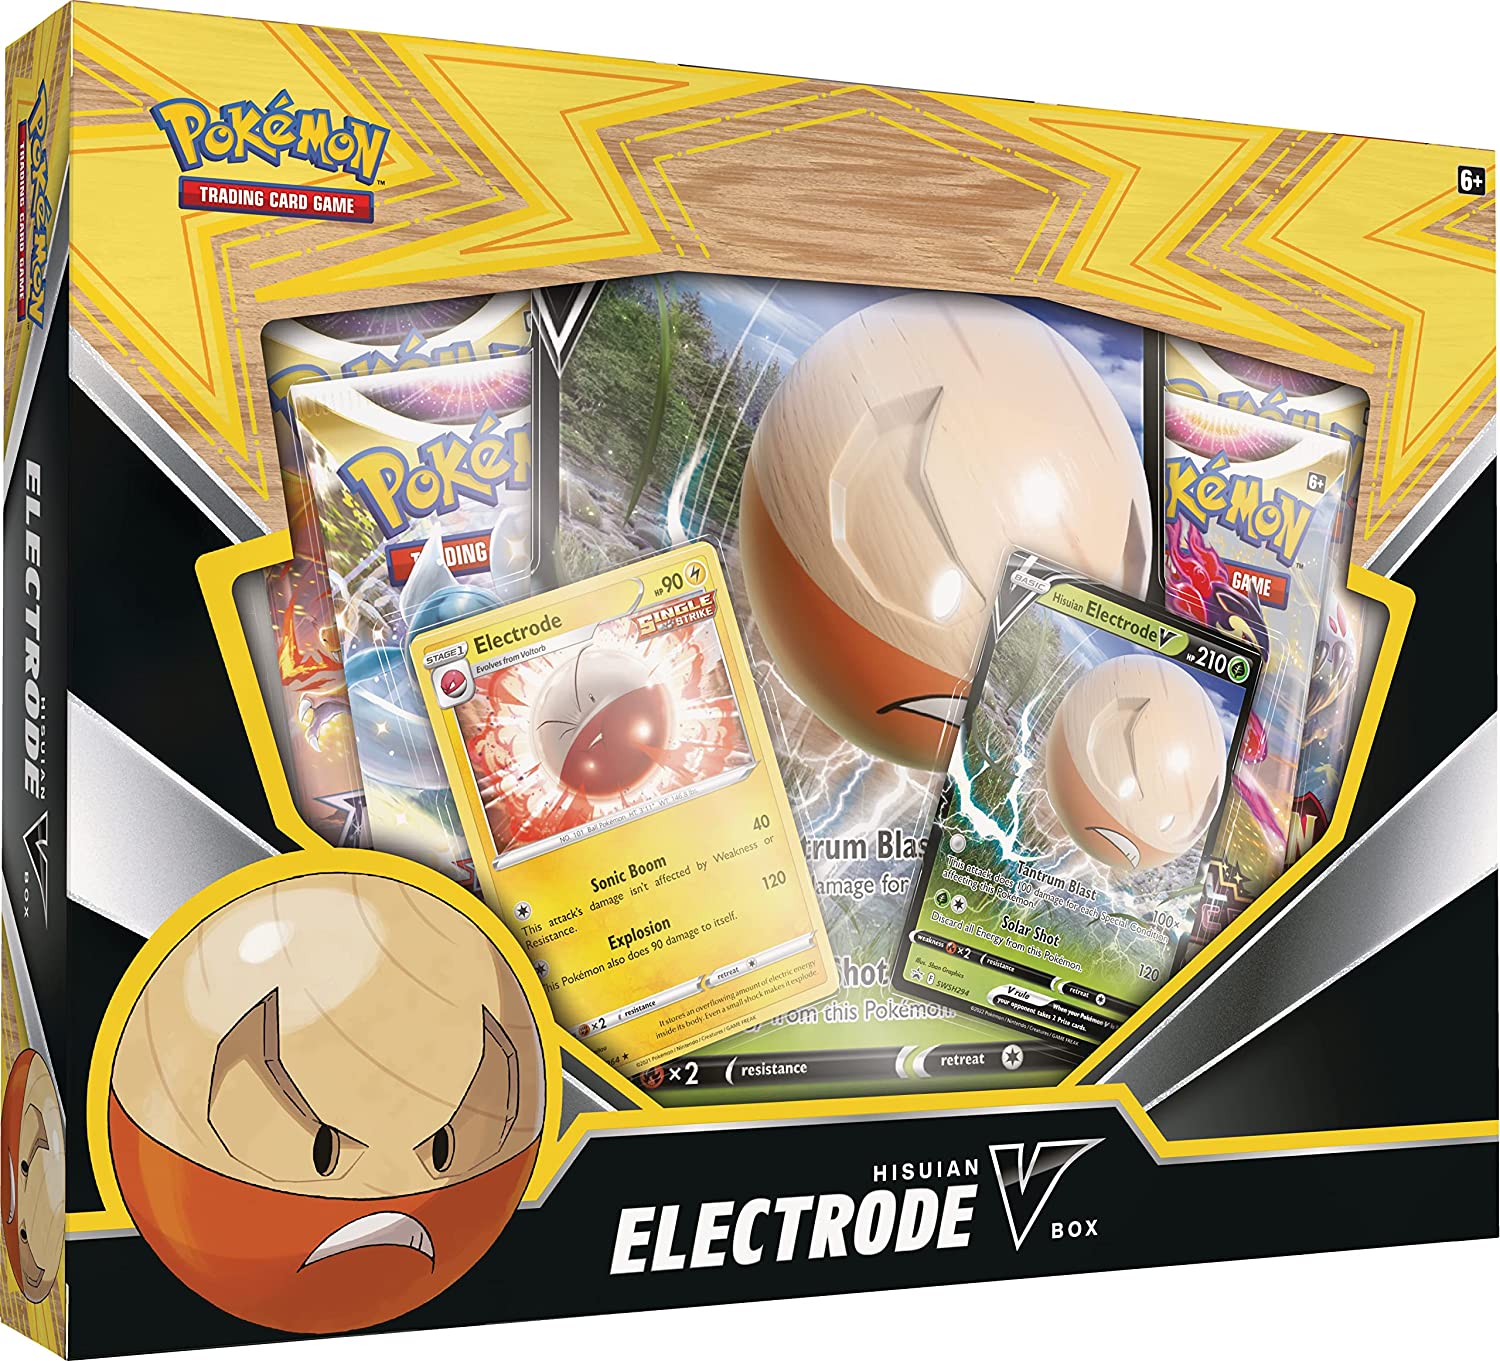 Pokemon Trading Card Game Hisuian Electrode V Box